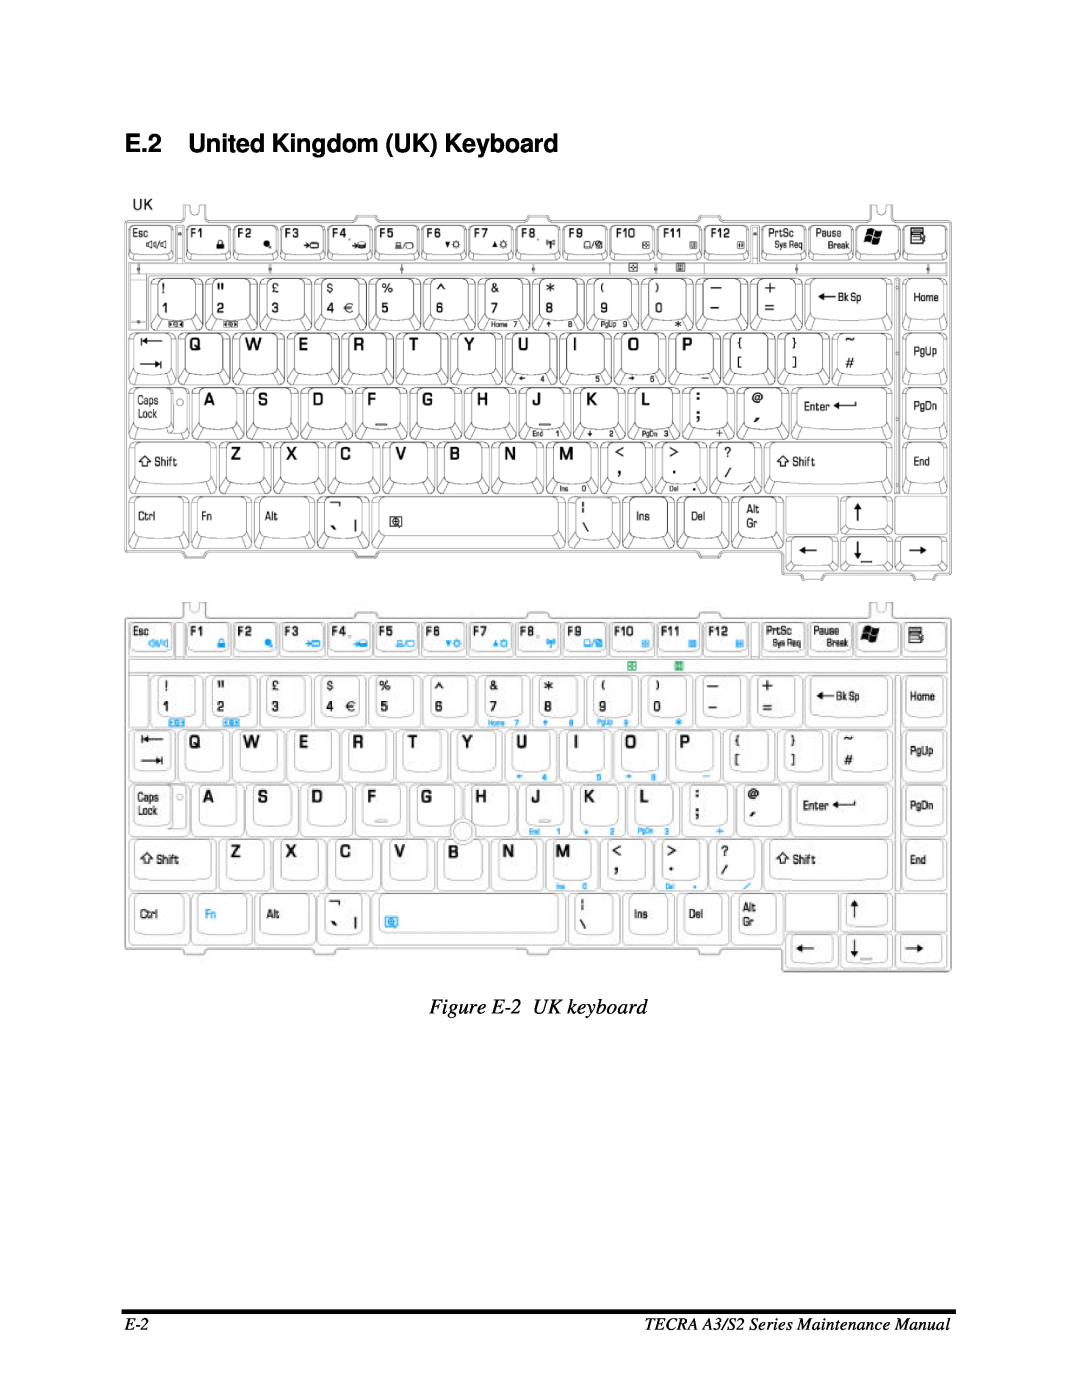 Toshiba manual E.2 United Kingdom UK Keyboard, Figure E-2 UK keyboard, TECRA A3/S2 Series Maintenance Manual 